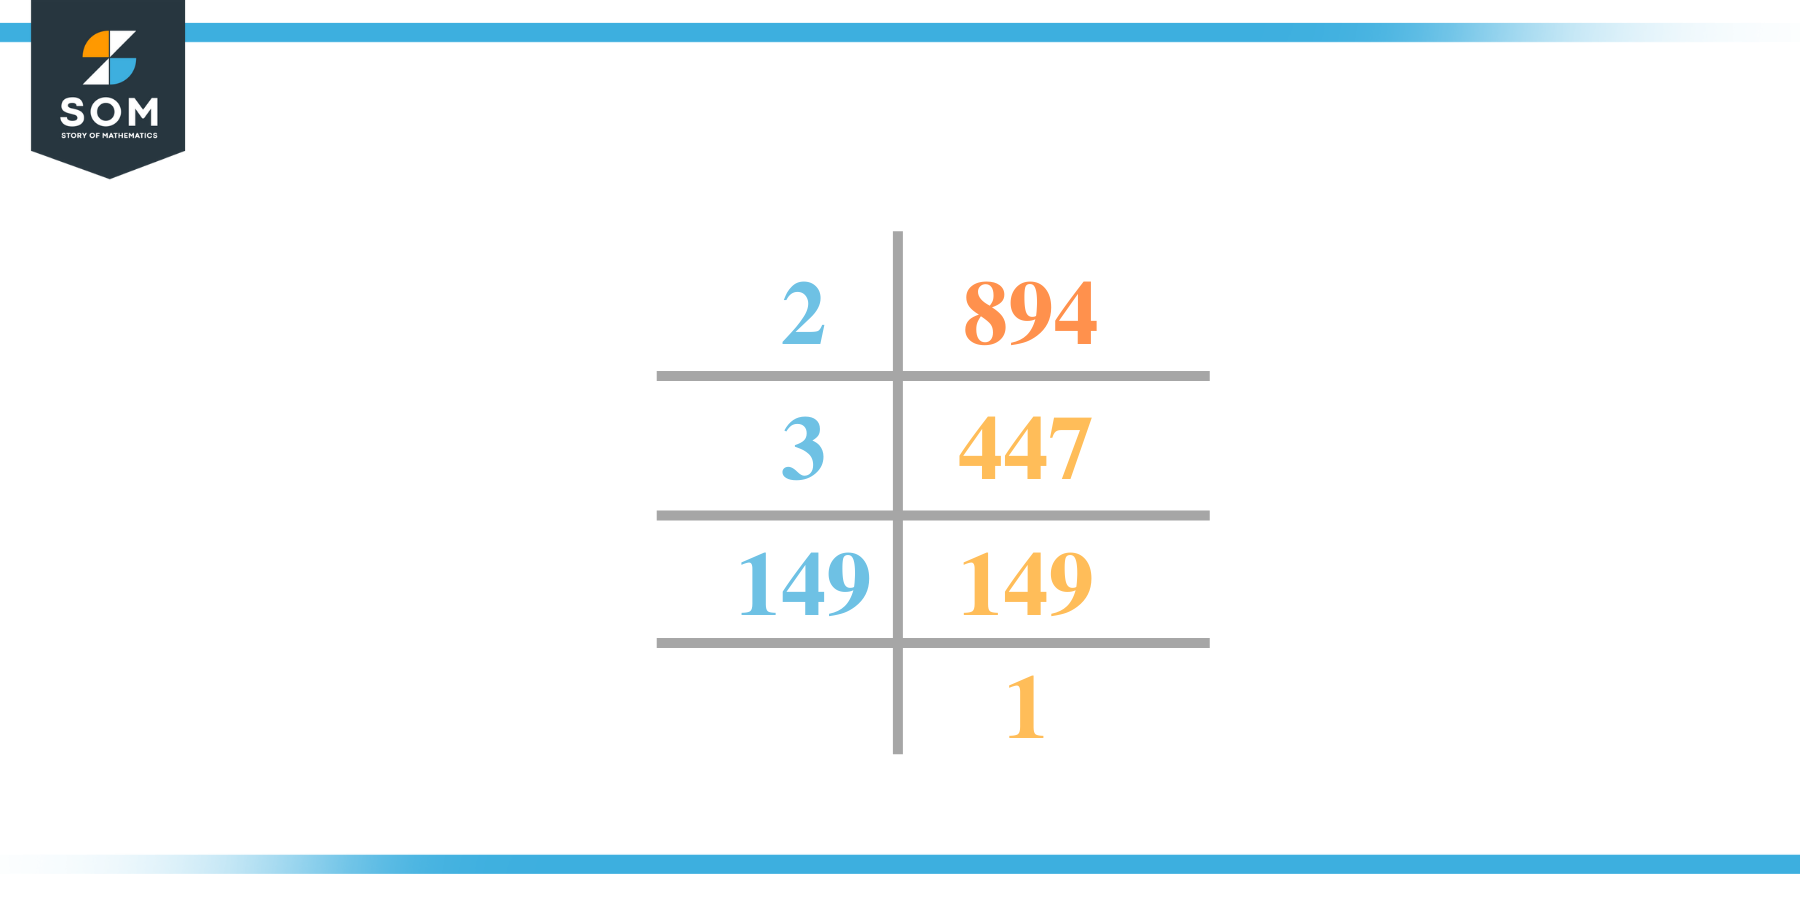 Prime factorization of 894